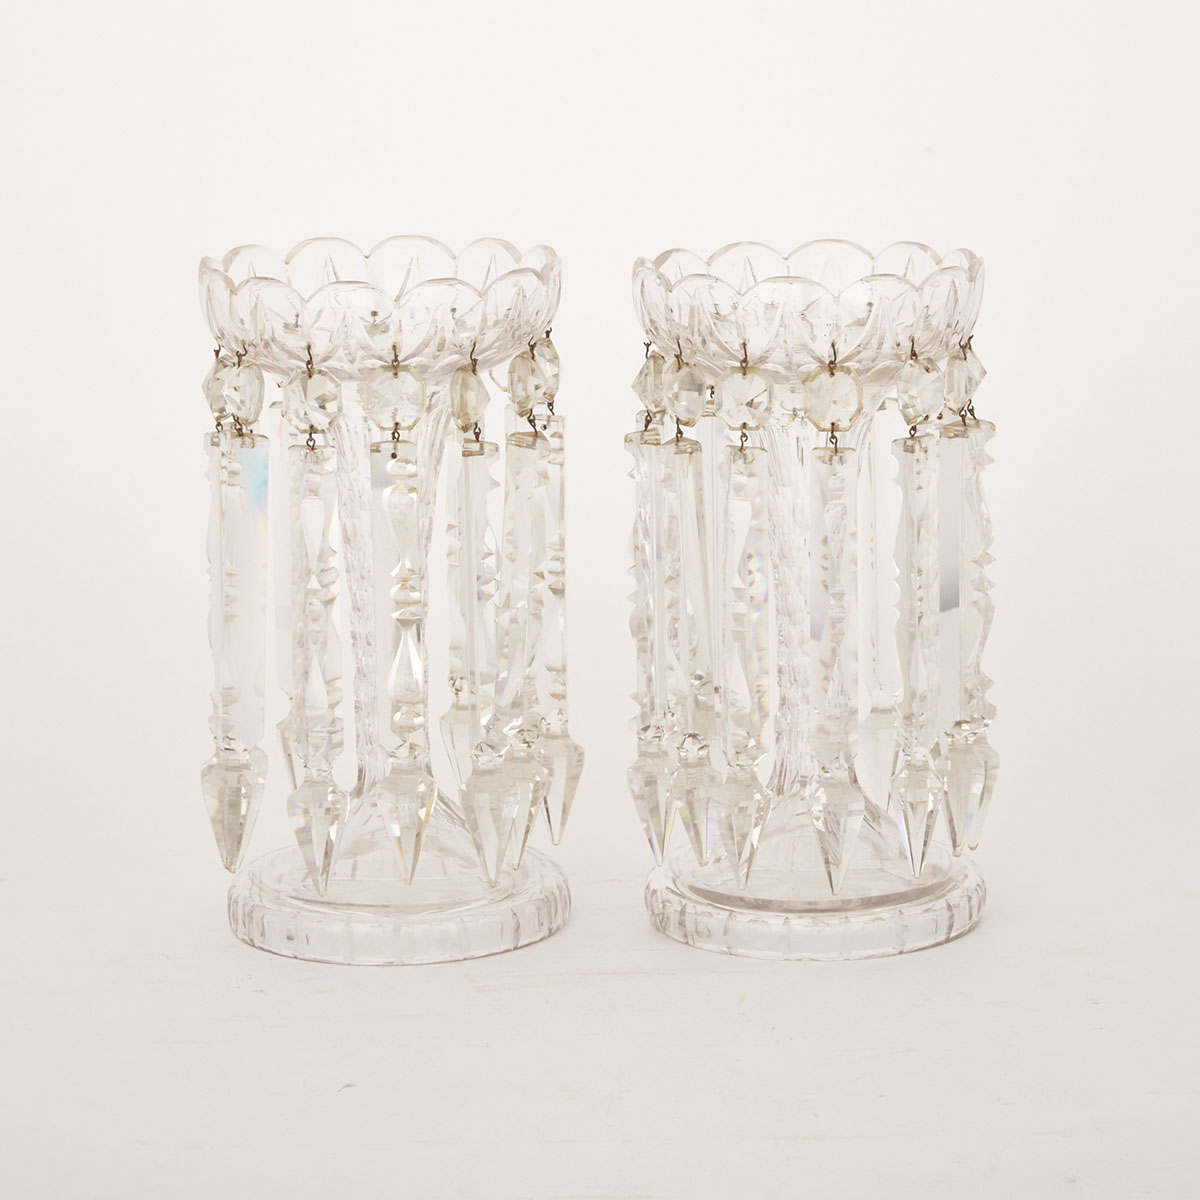 Pair of Cut Glass Lustres, 20th century